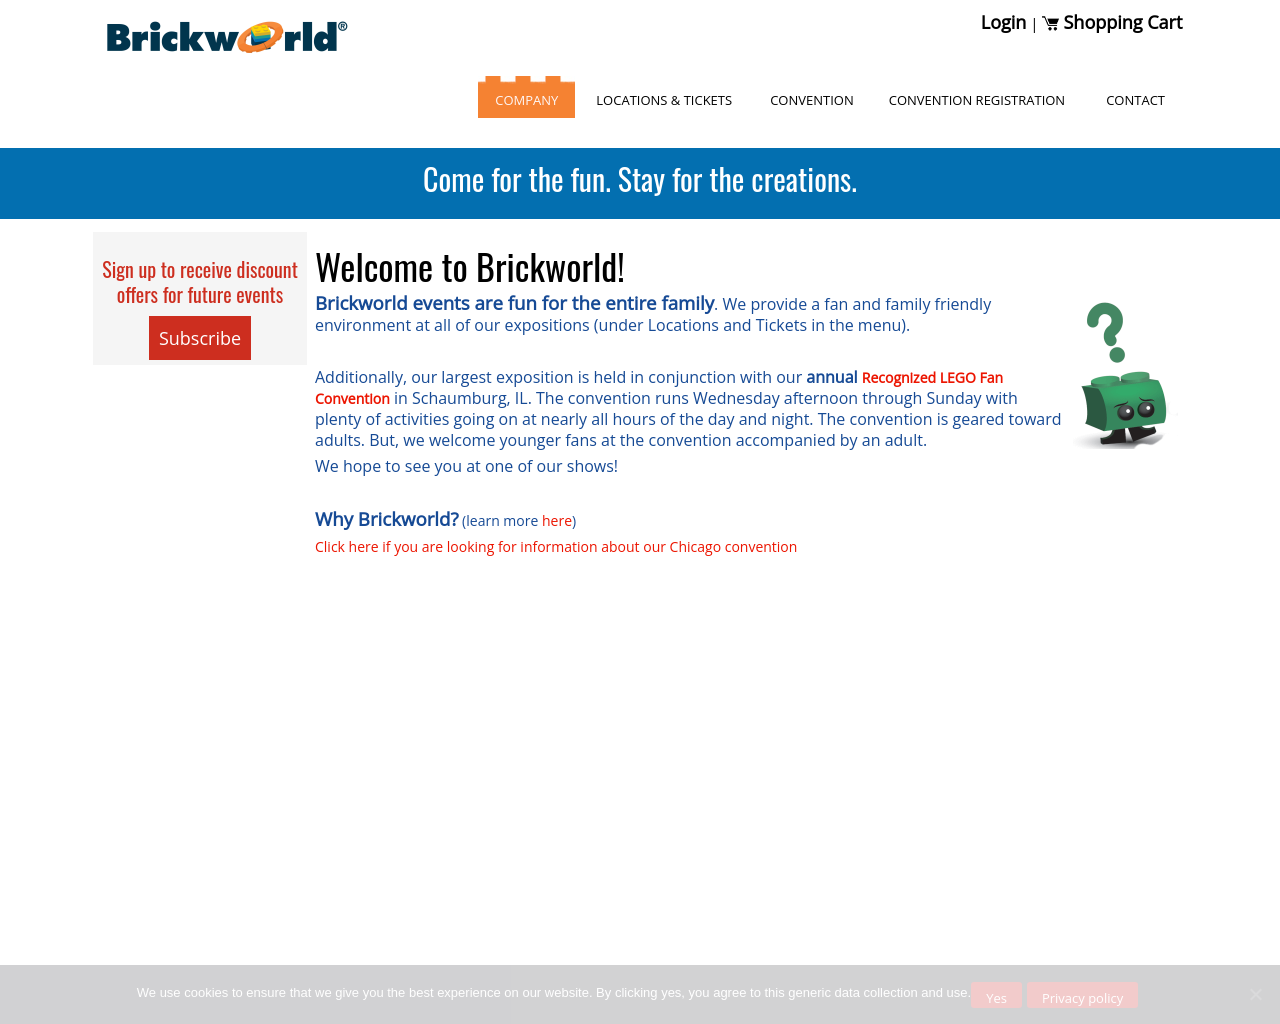 brickworld.com